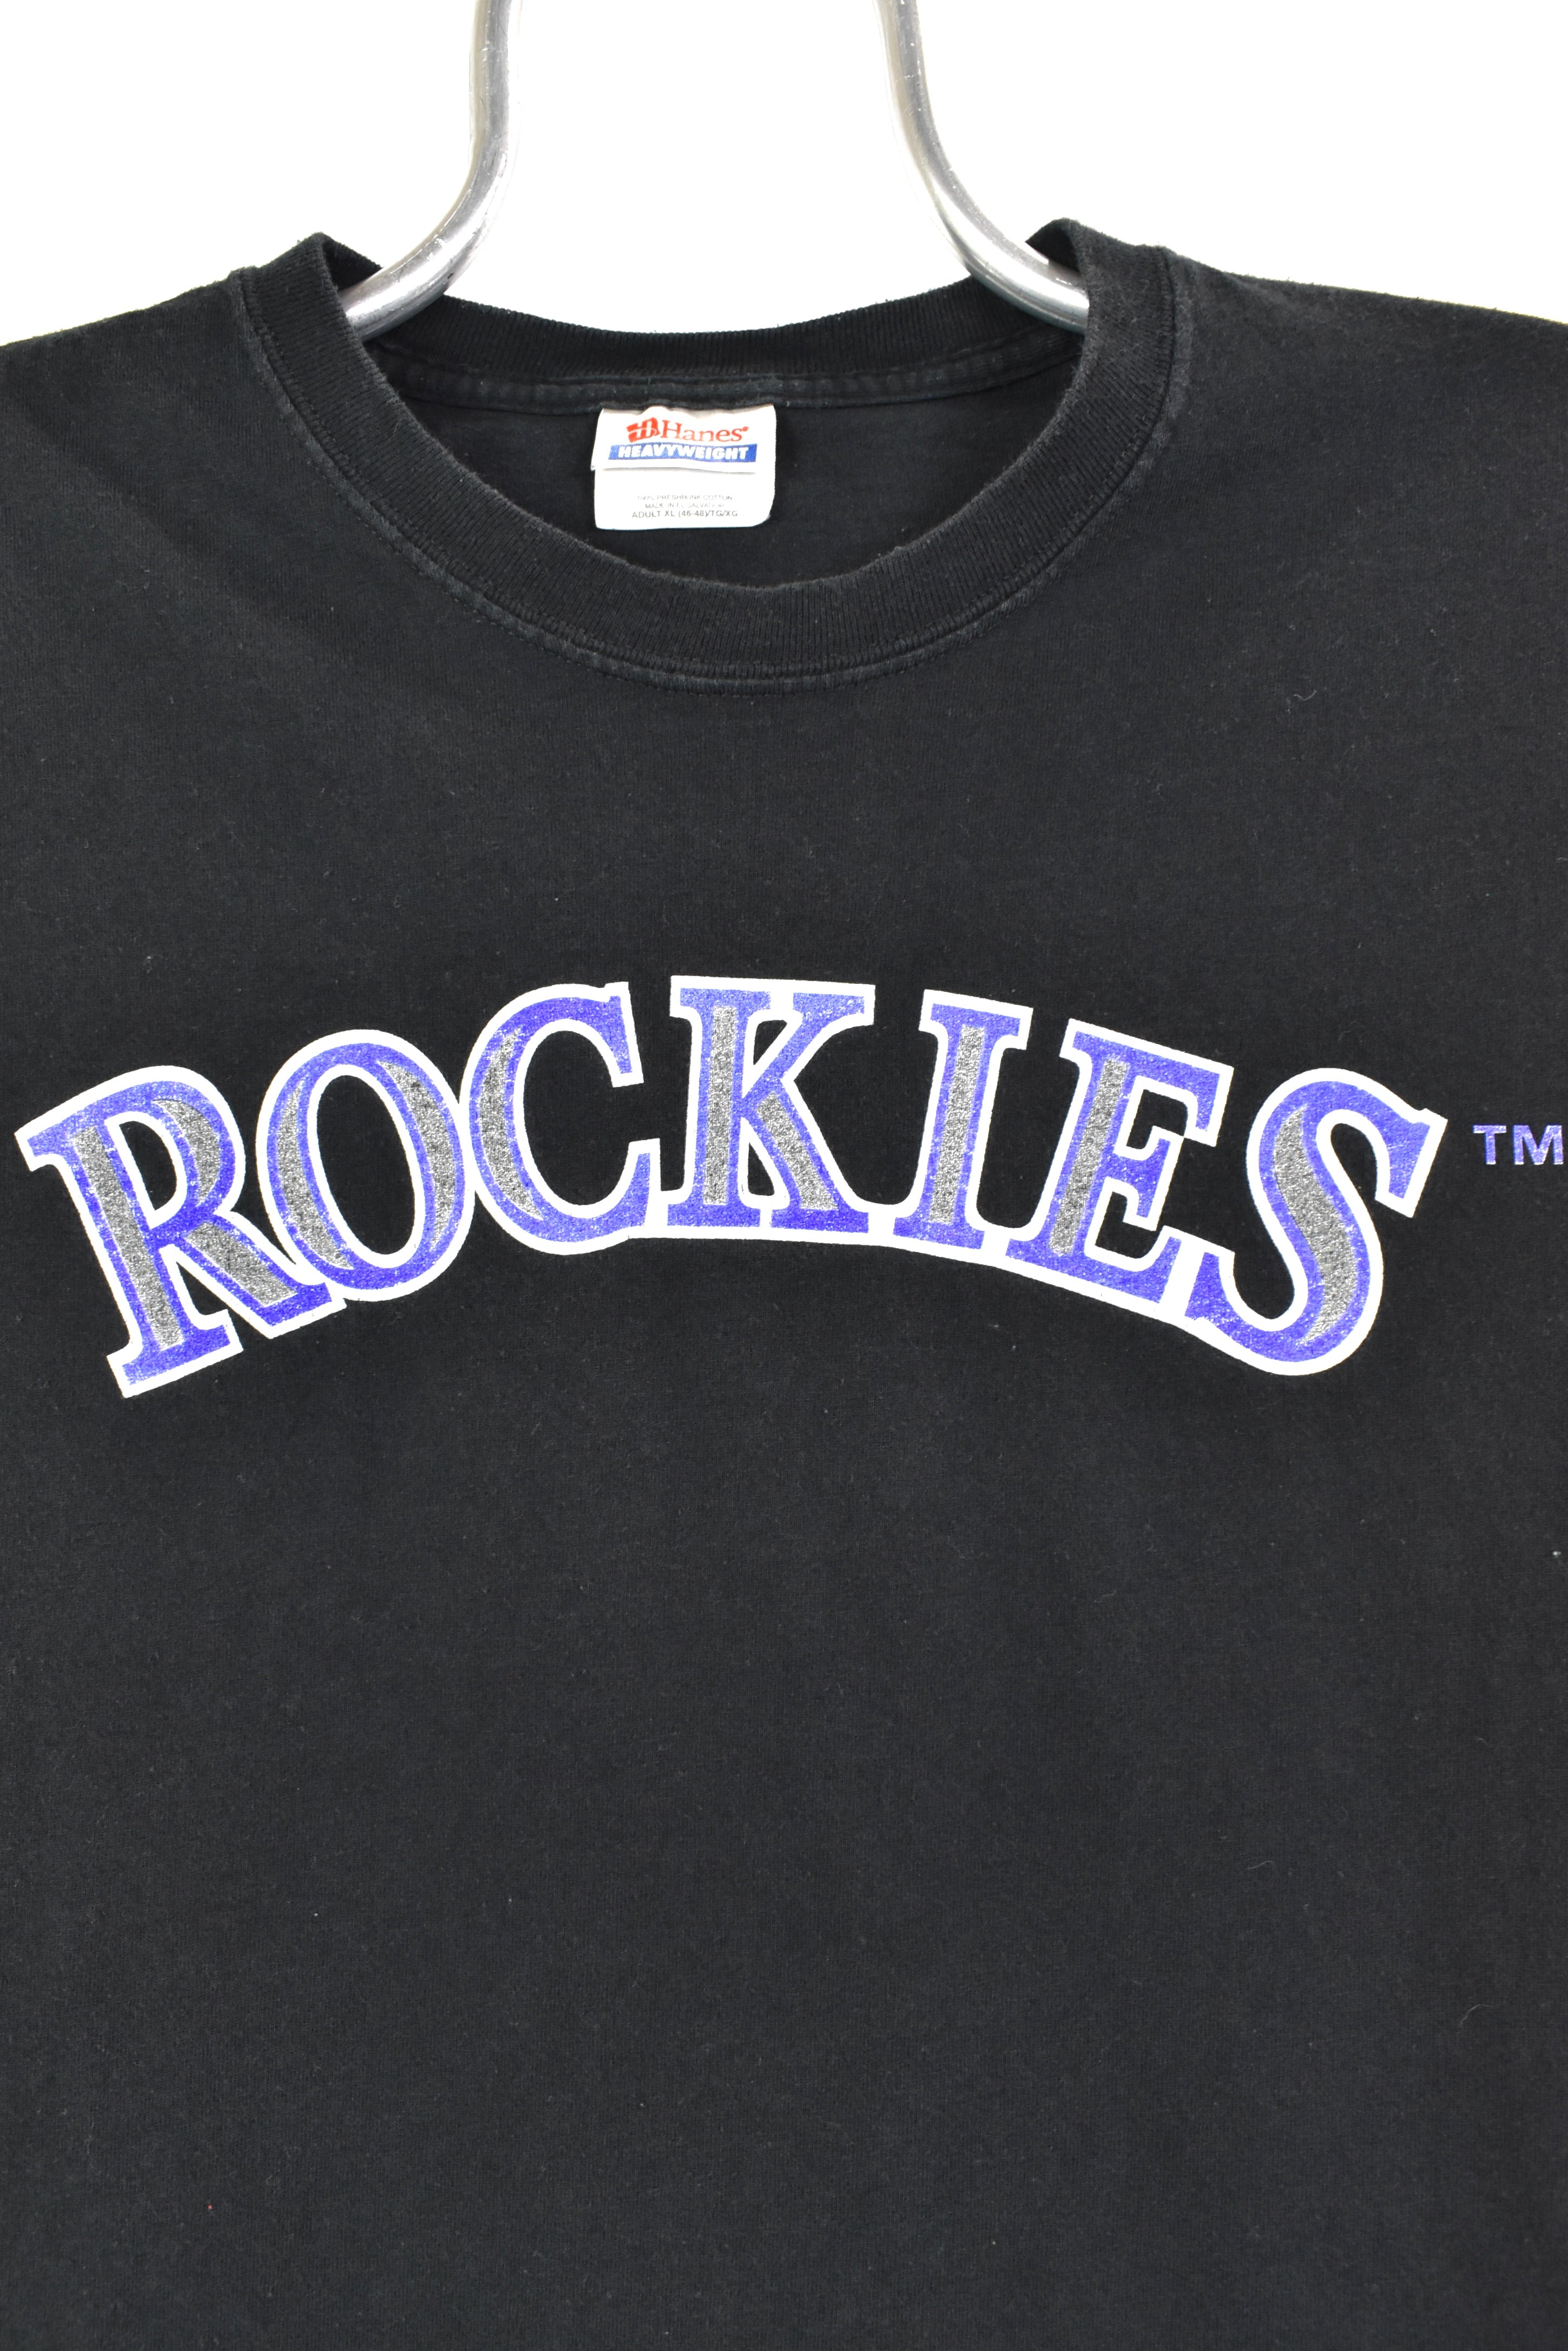 rockies shirt